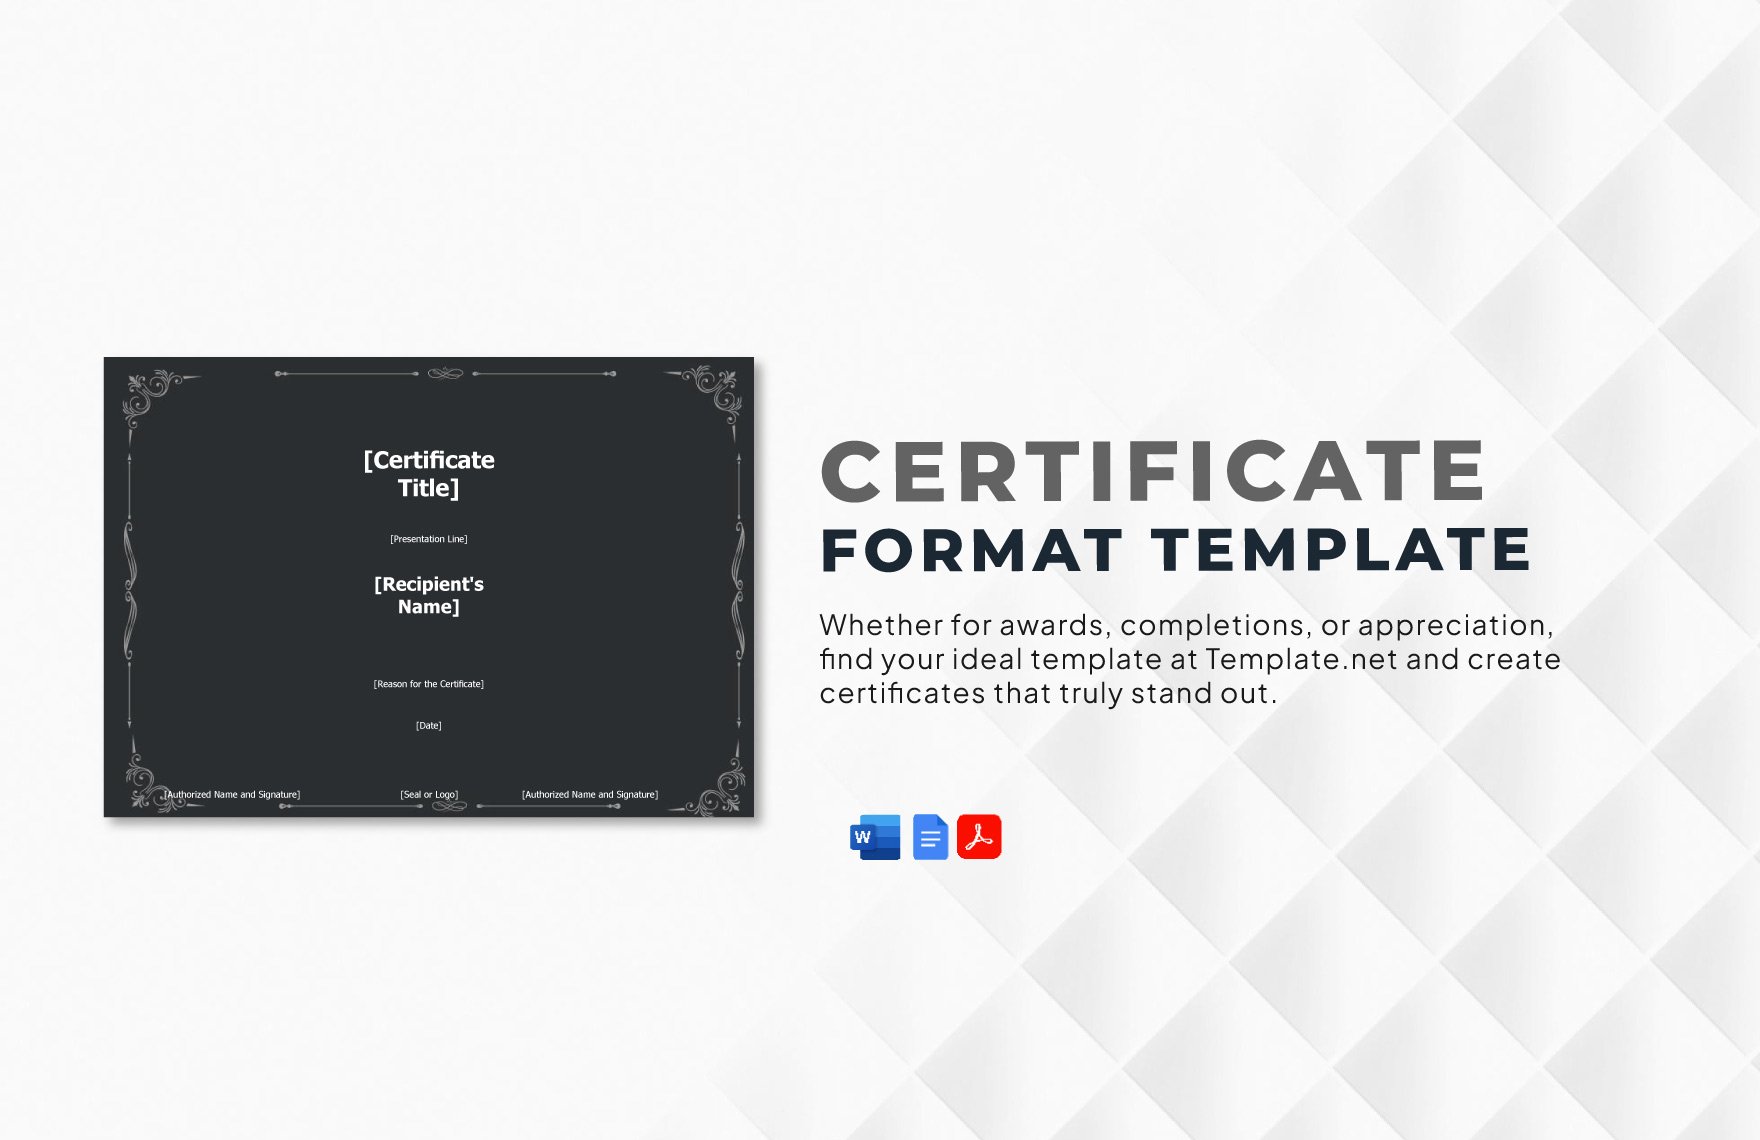 Certificate Format Template